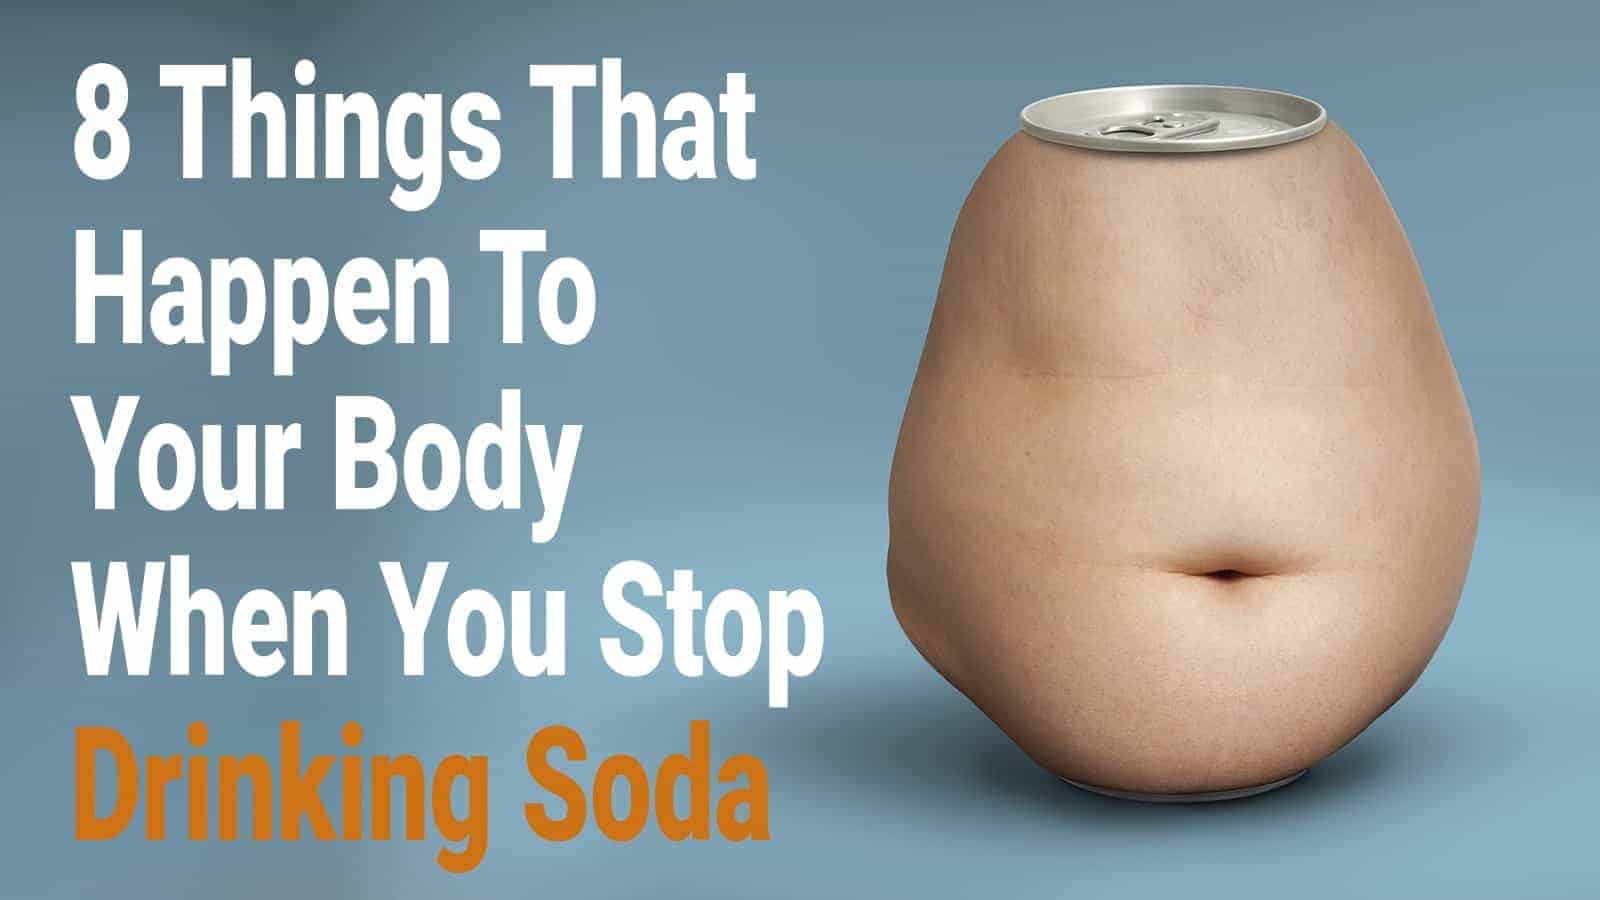 stop drinking soda